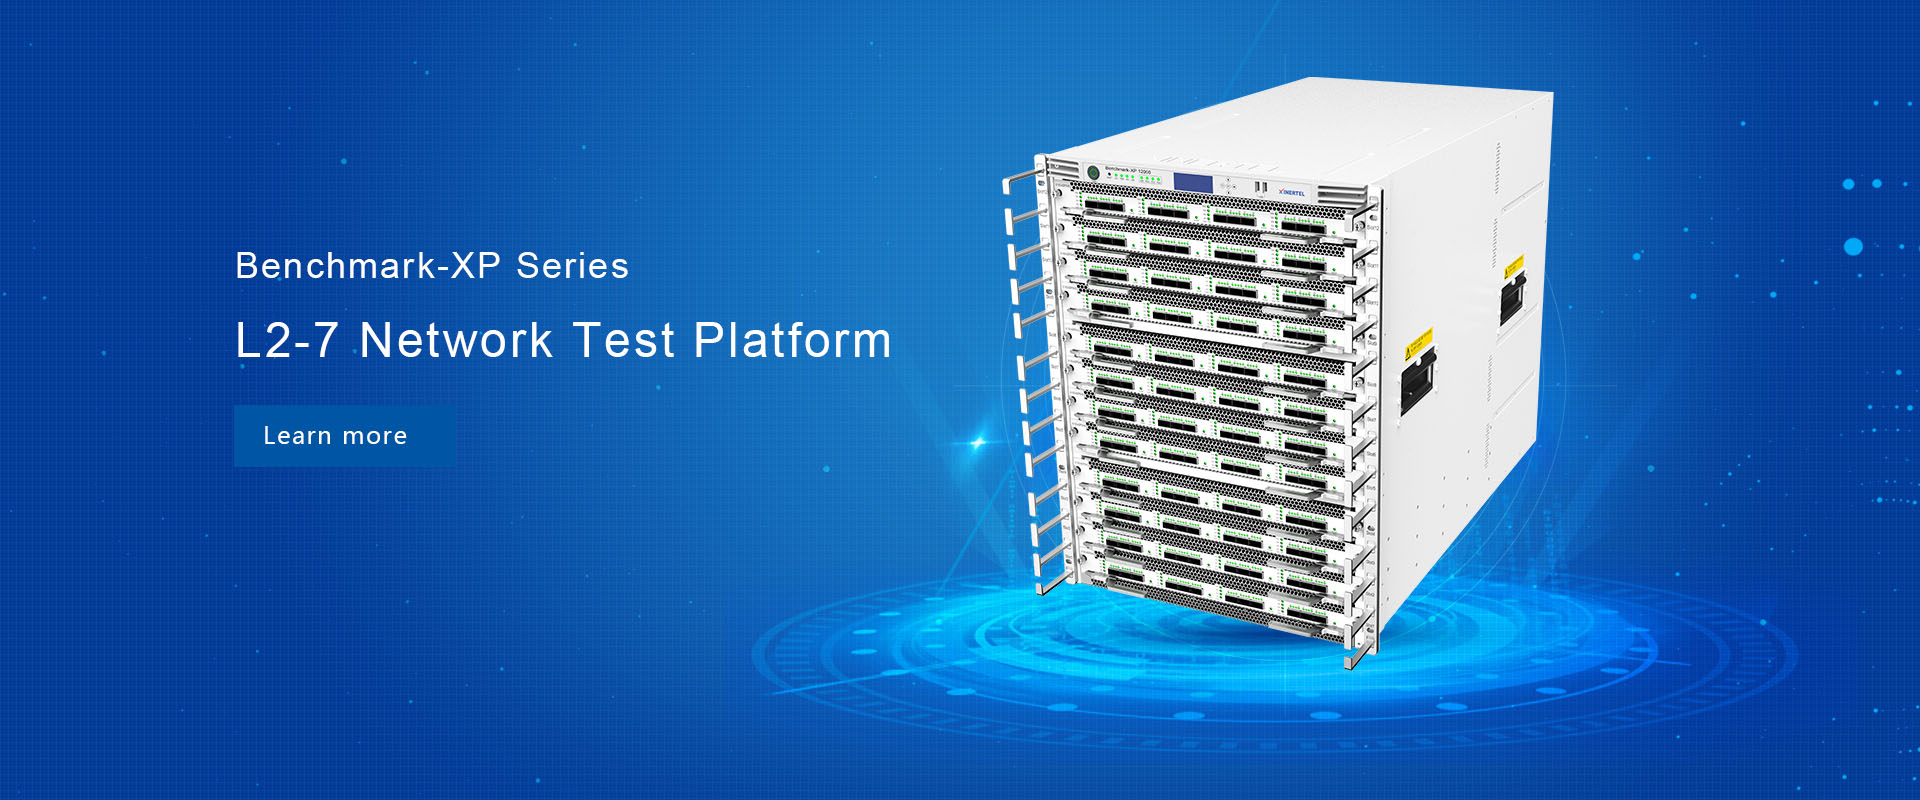 Network Test Platform